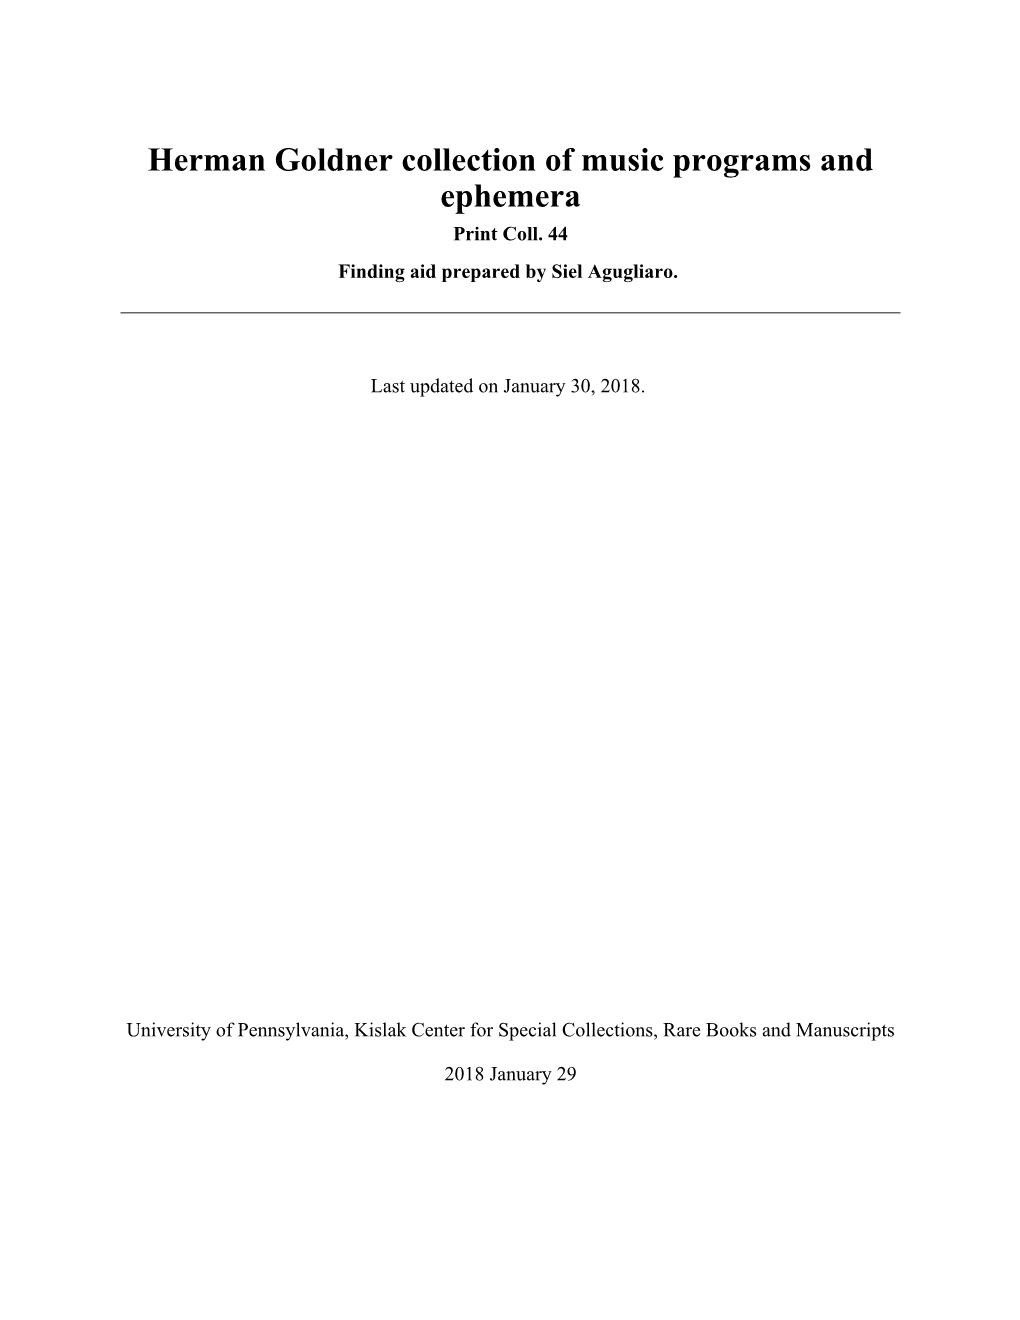 Herman Goldner Collection of Music Programs and Ephemera Print Coll